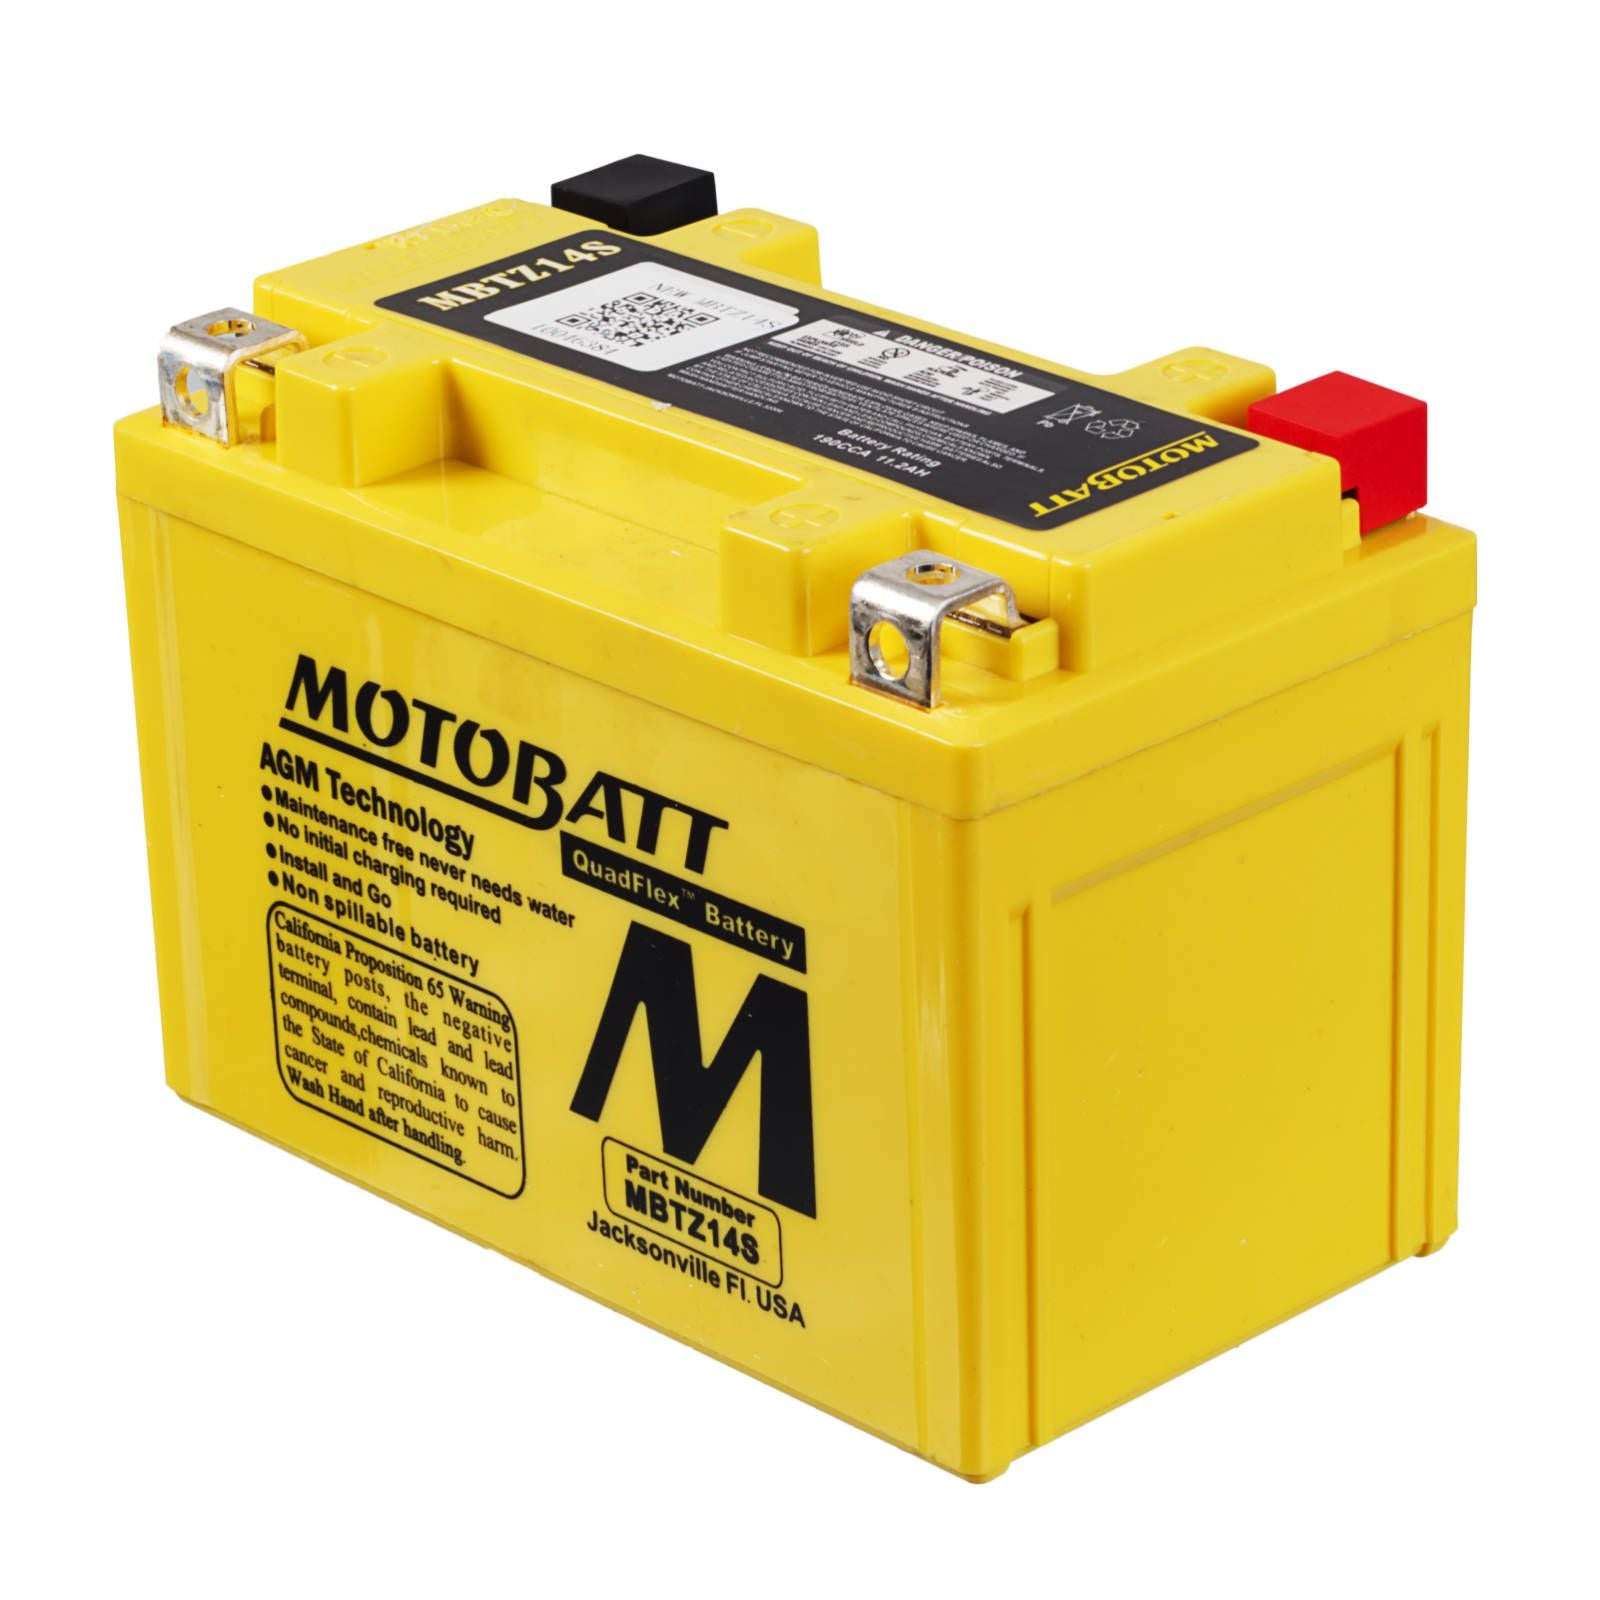 New MOTOBATT Quadflex AGM Battery #MBTZ14S